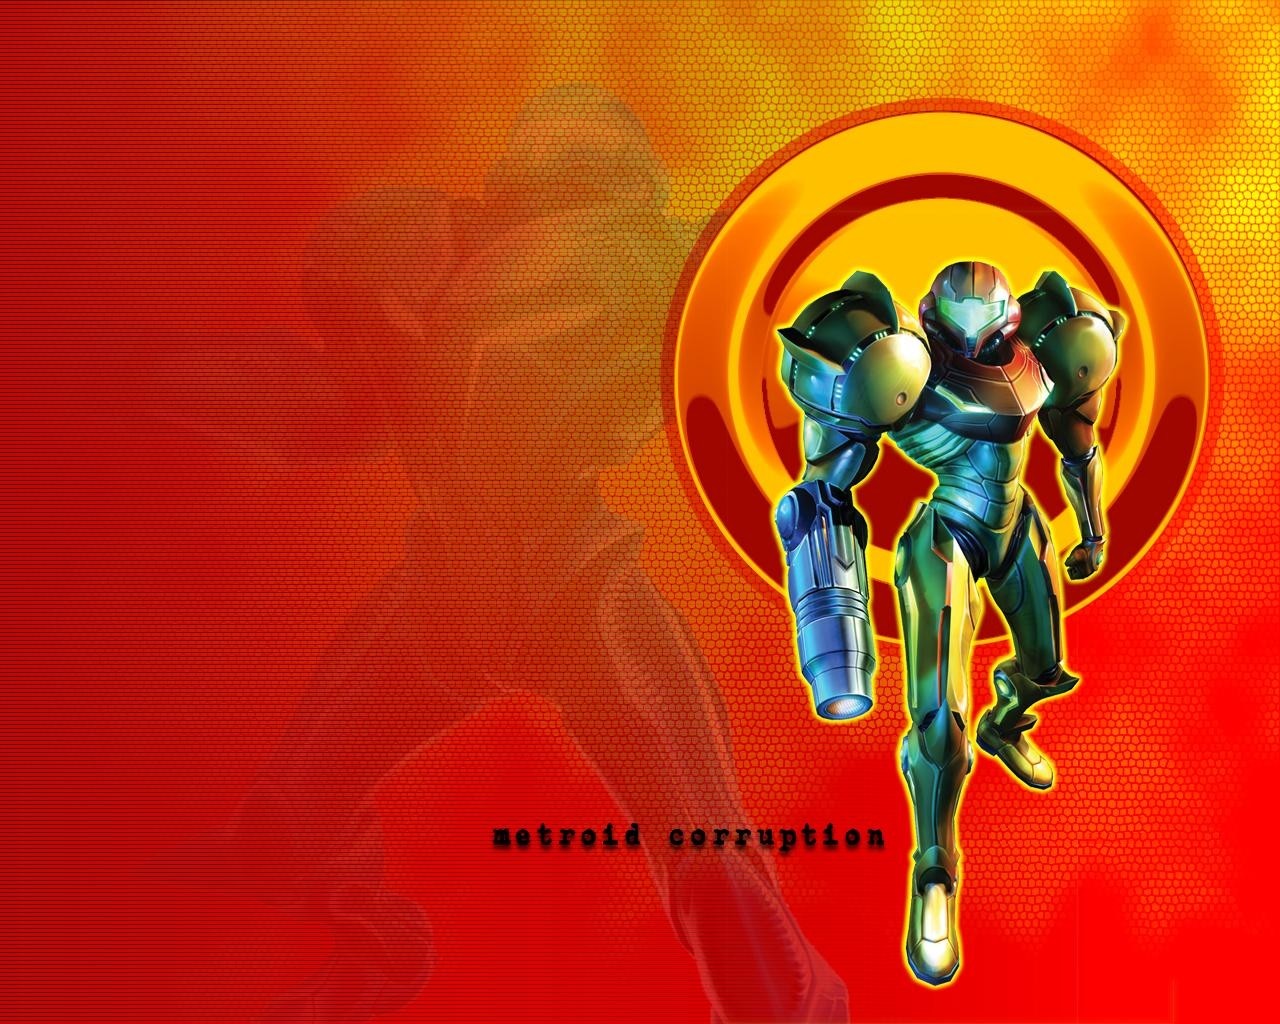 "Metroid Prime 3: Corruption" desktop wallpaper (1280 x 1024 pixels)